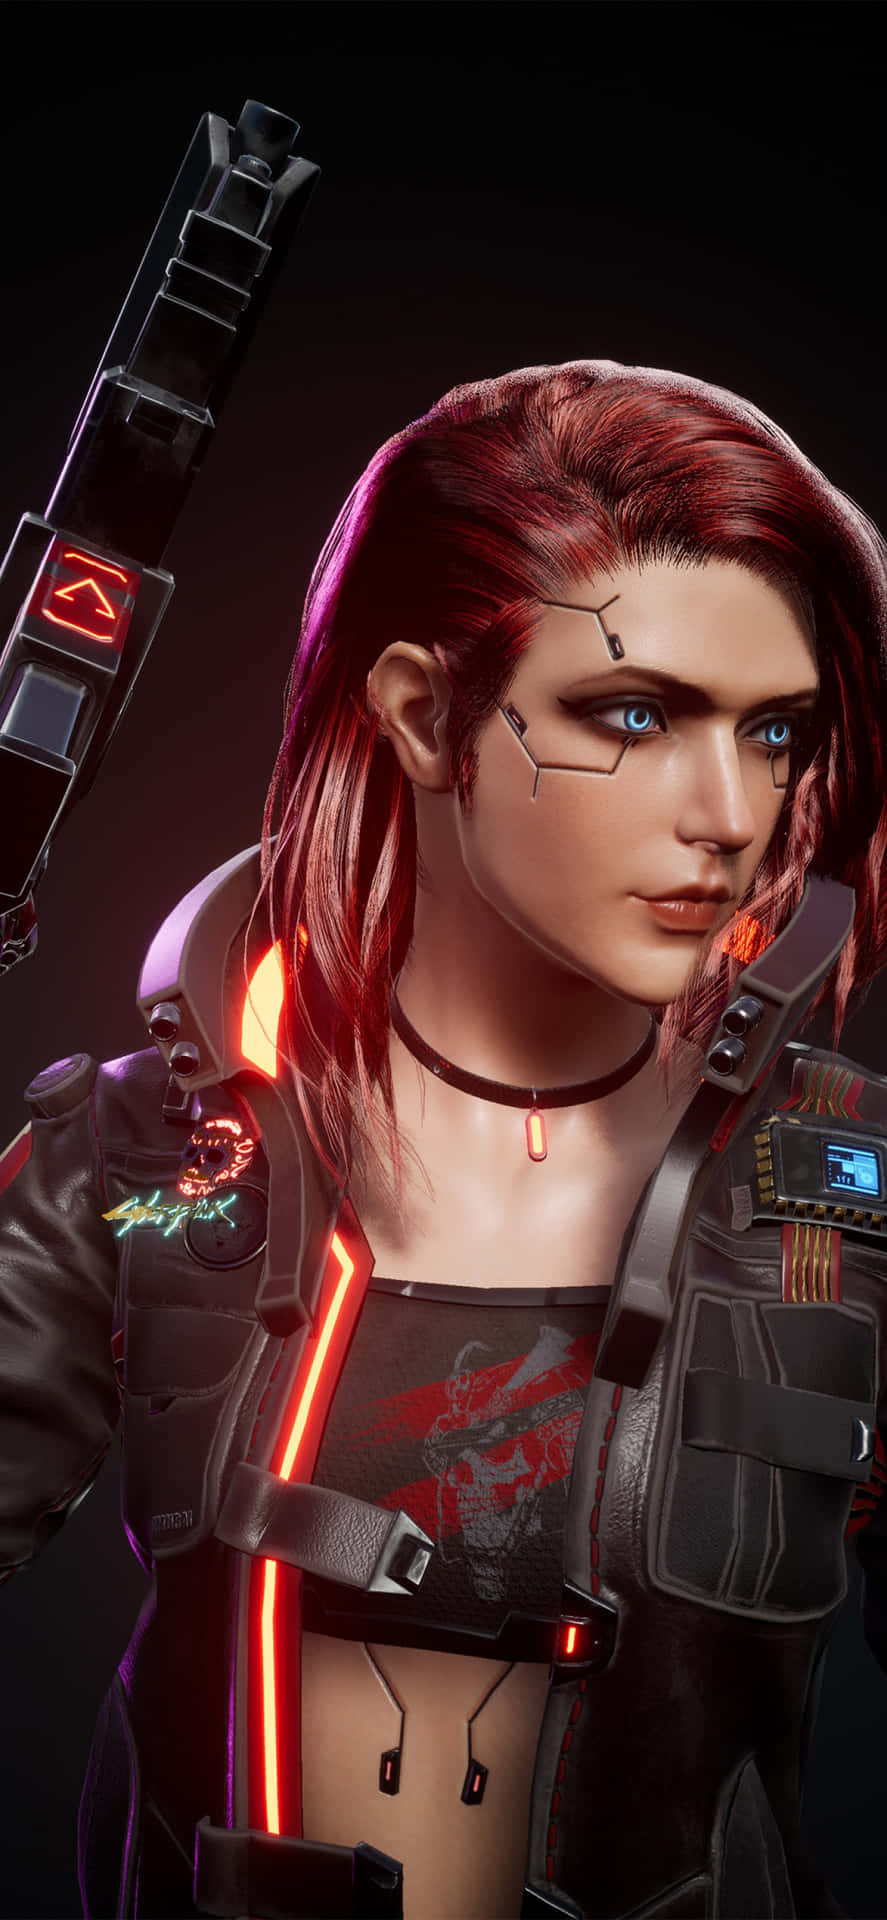 Fondode Pantalla Personalizado De Iphone X Con Un Personaje De Cyberpunk 2077 Con Cabello Rojo.